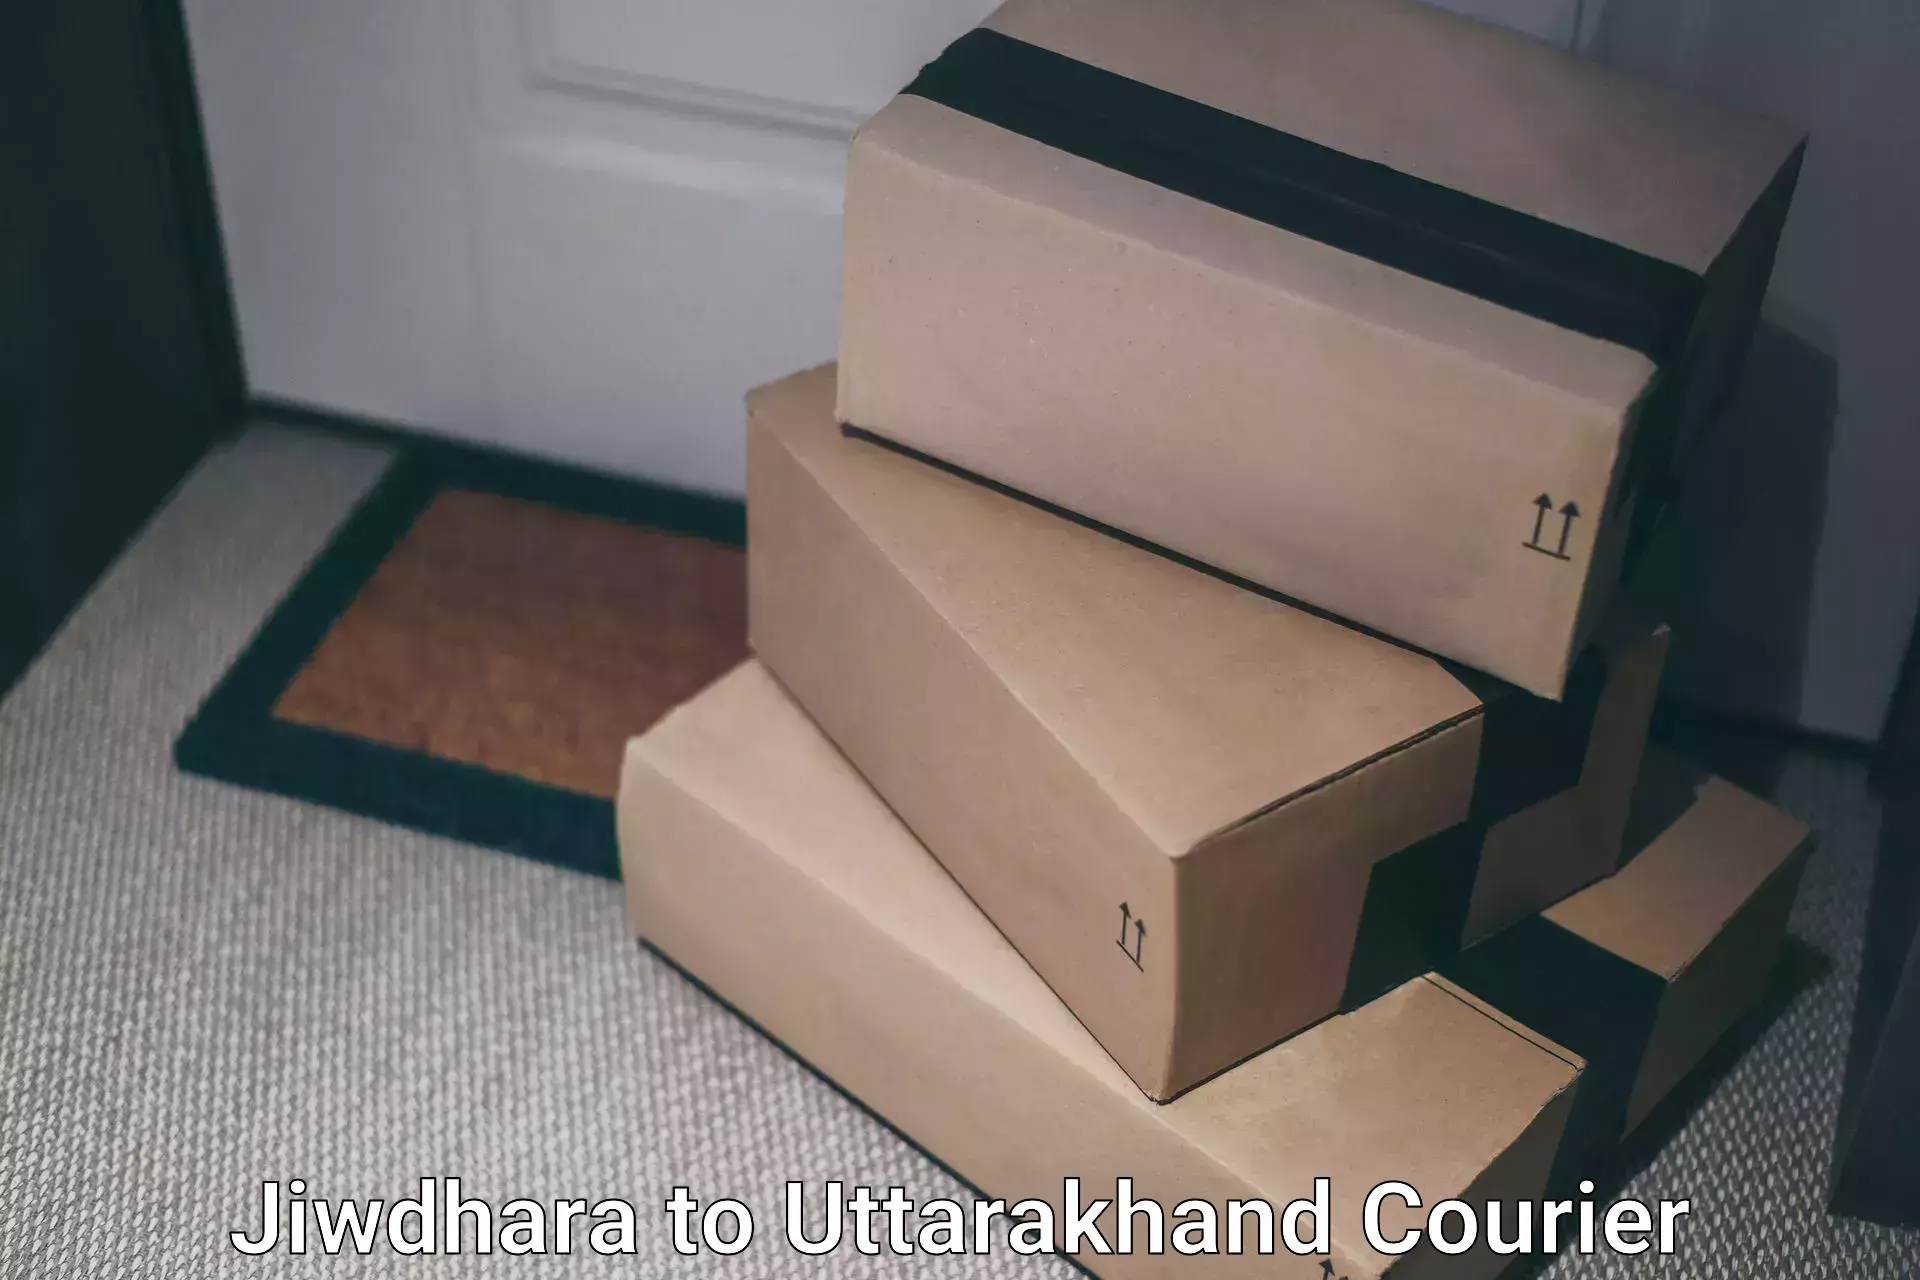 Express courier capabilities in Jiwdhara to Bhimtal